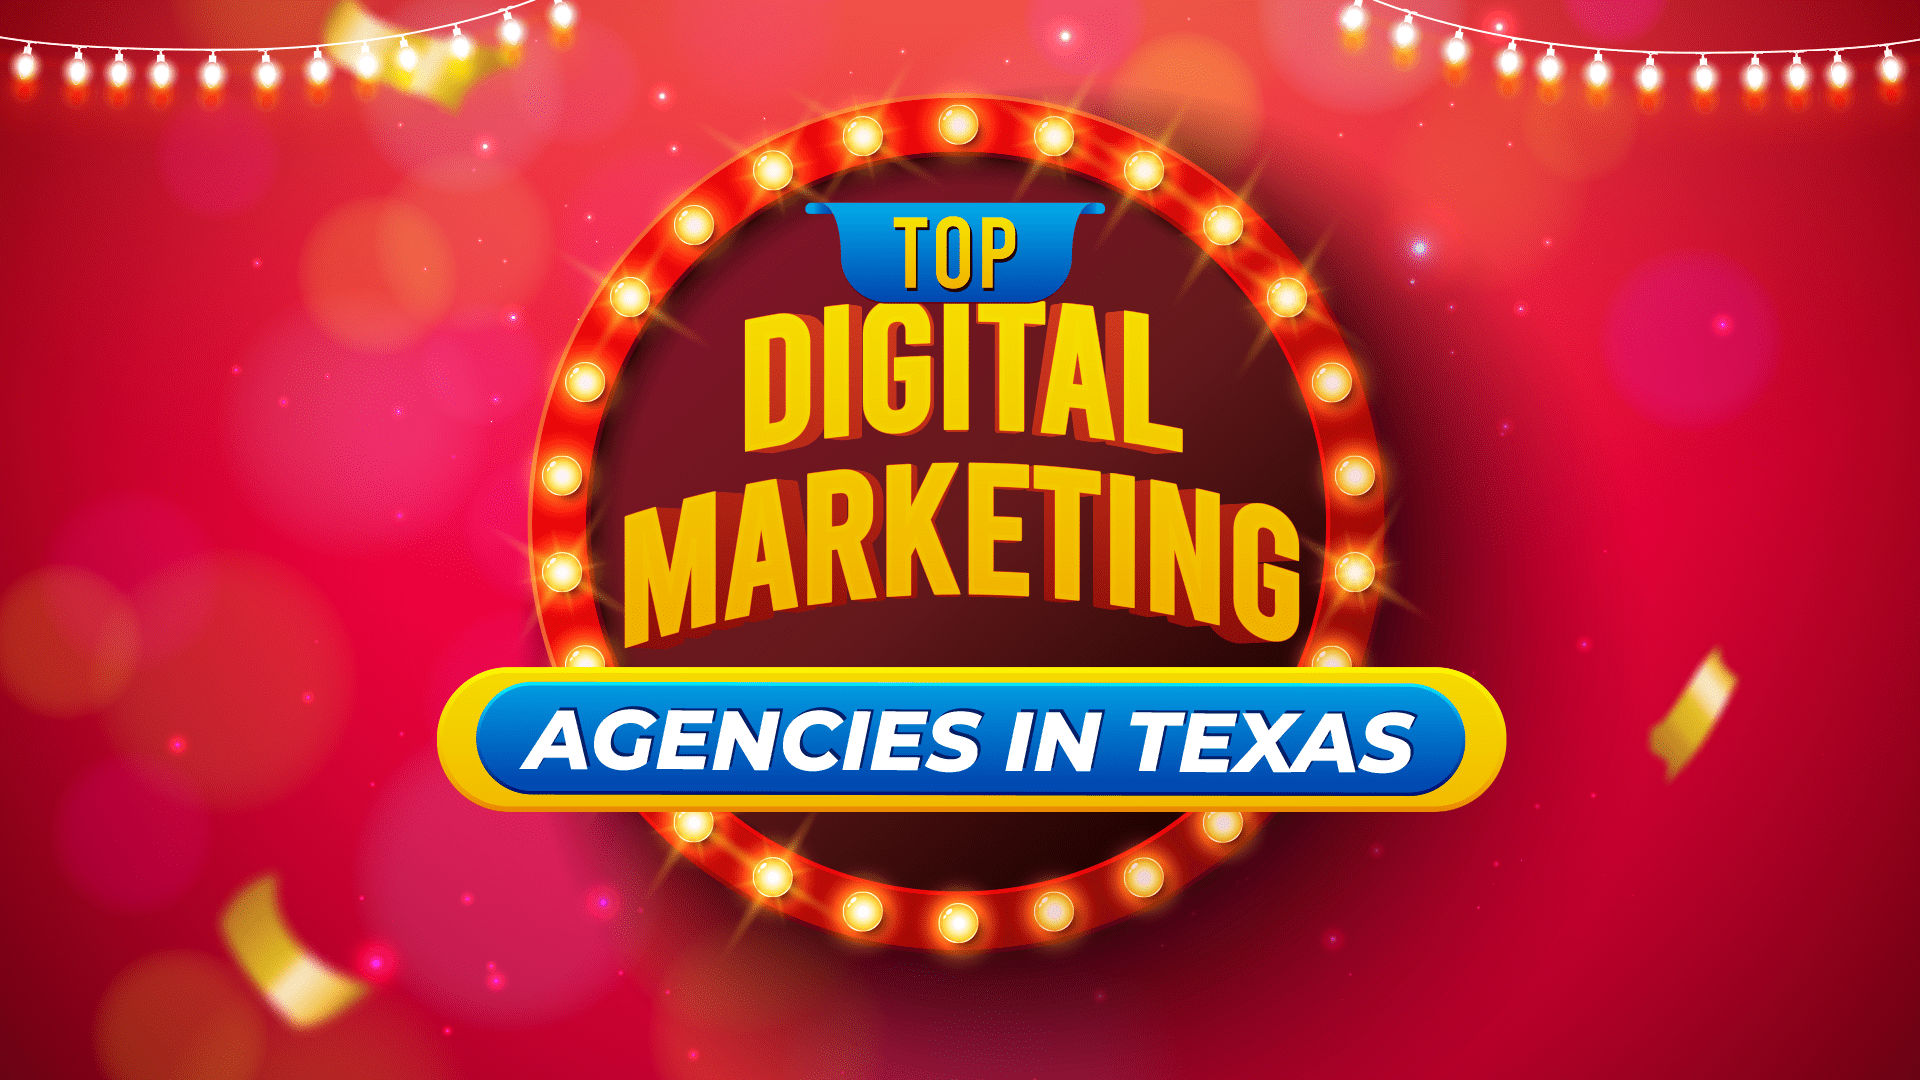 Top Digital Marketing Agencies in Texas